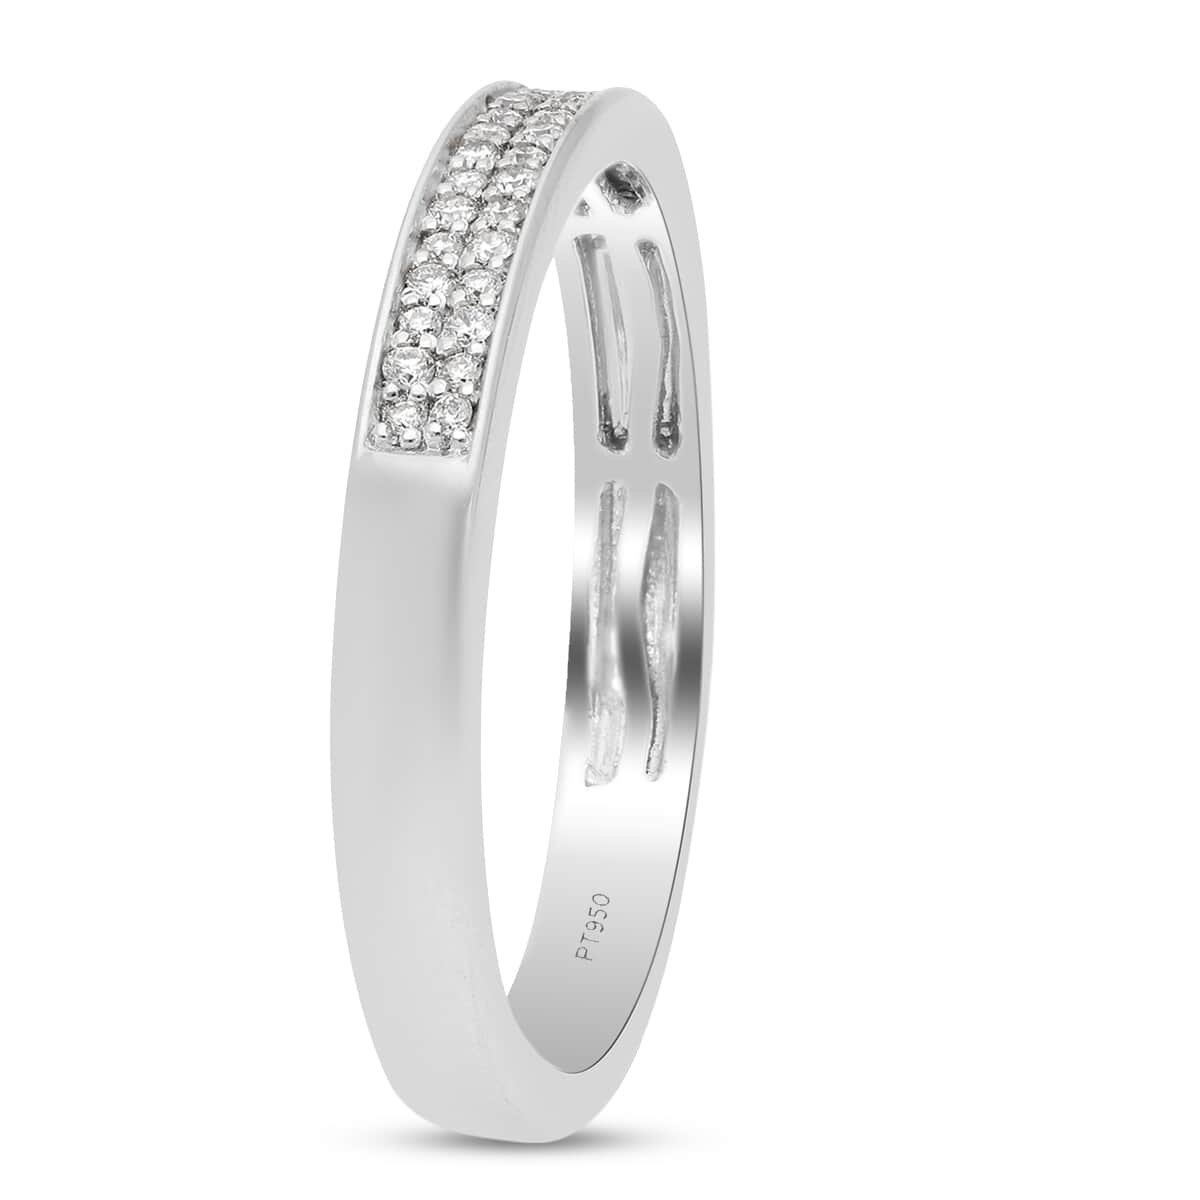 RHAPSODY IGI Certified 950 Platinum Diamond (E-F, VS) Ring (Size 9.0) (5 g) 0.18 ctw image number 3